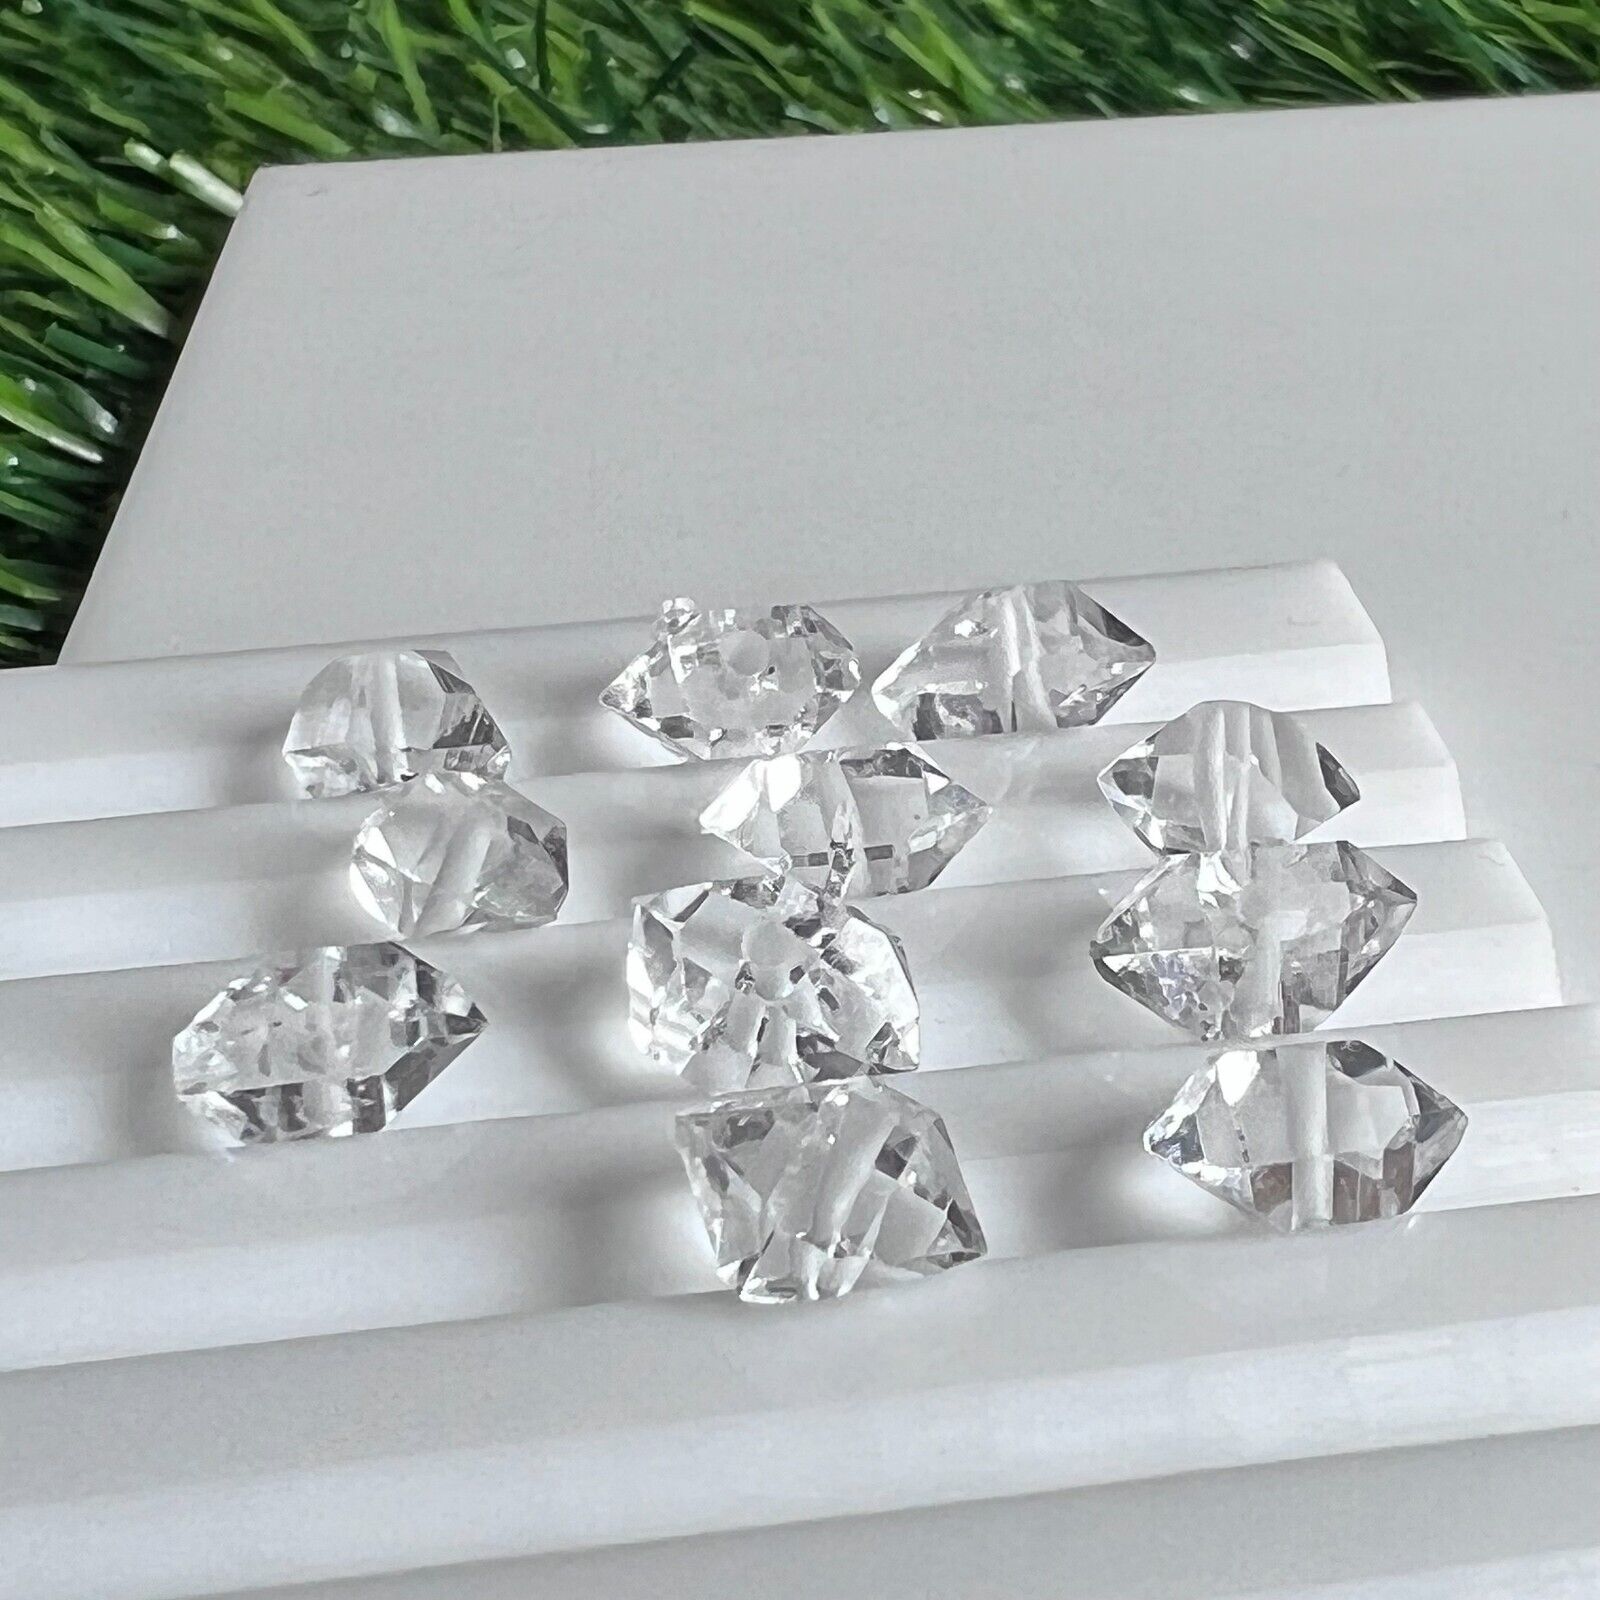 6 pcs Drilled Herkimer diamond crystals 9-10mm